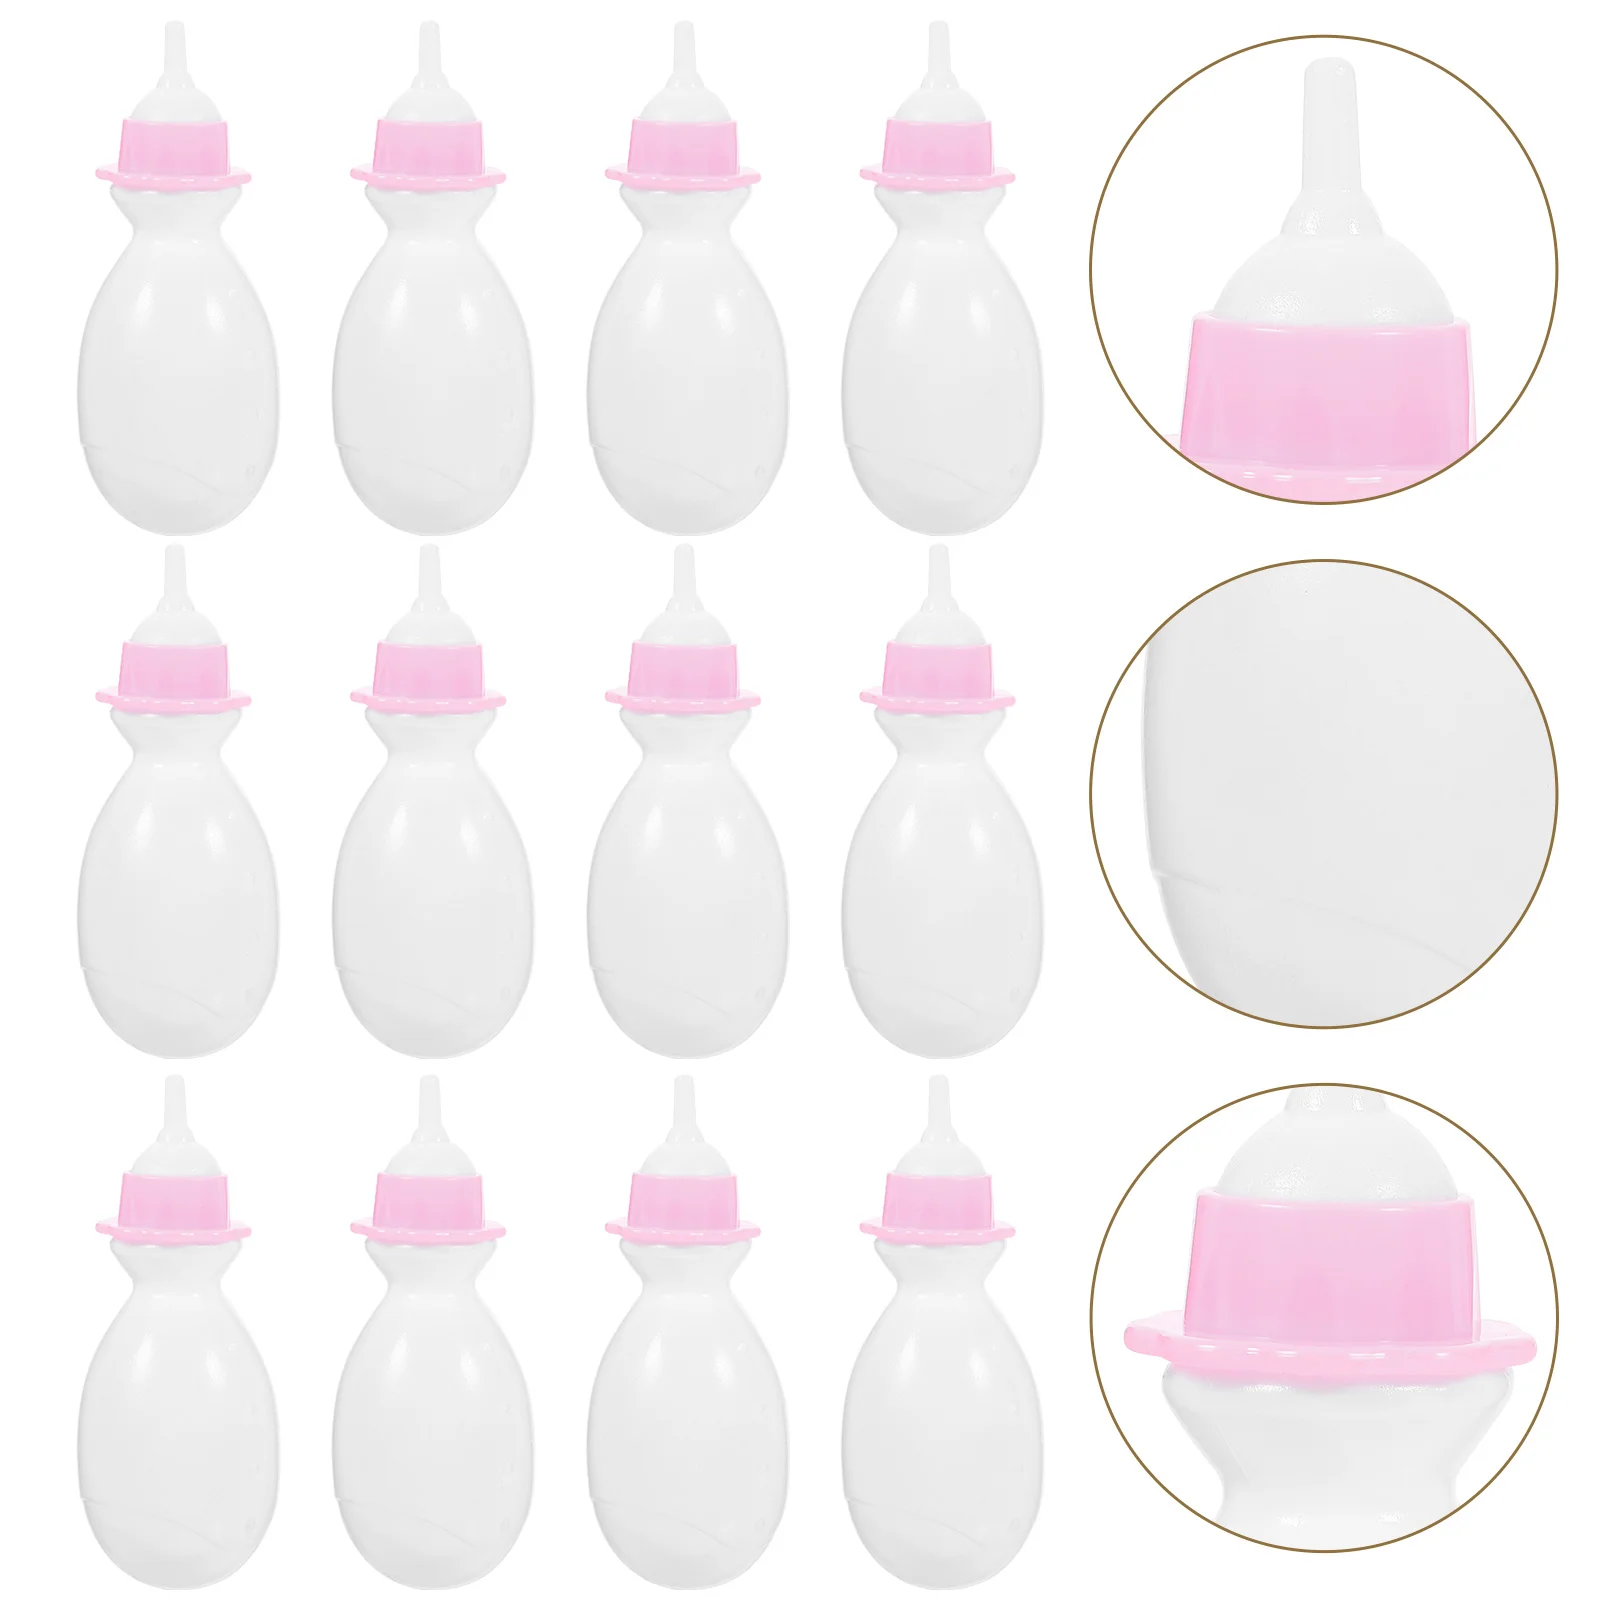 

Baby Bottle Girls Bottles Kids Small Feed Shower Favors Miniature Milk Dolls Dolly House Toy